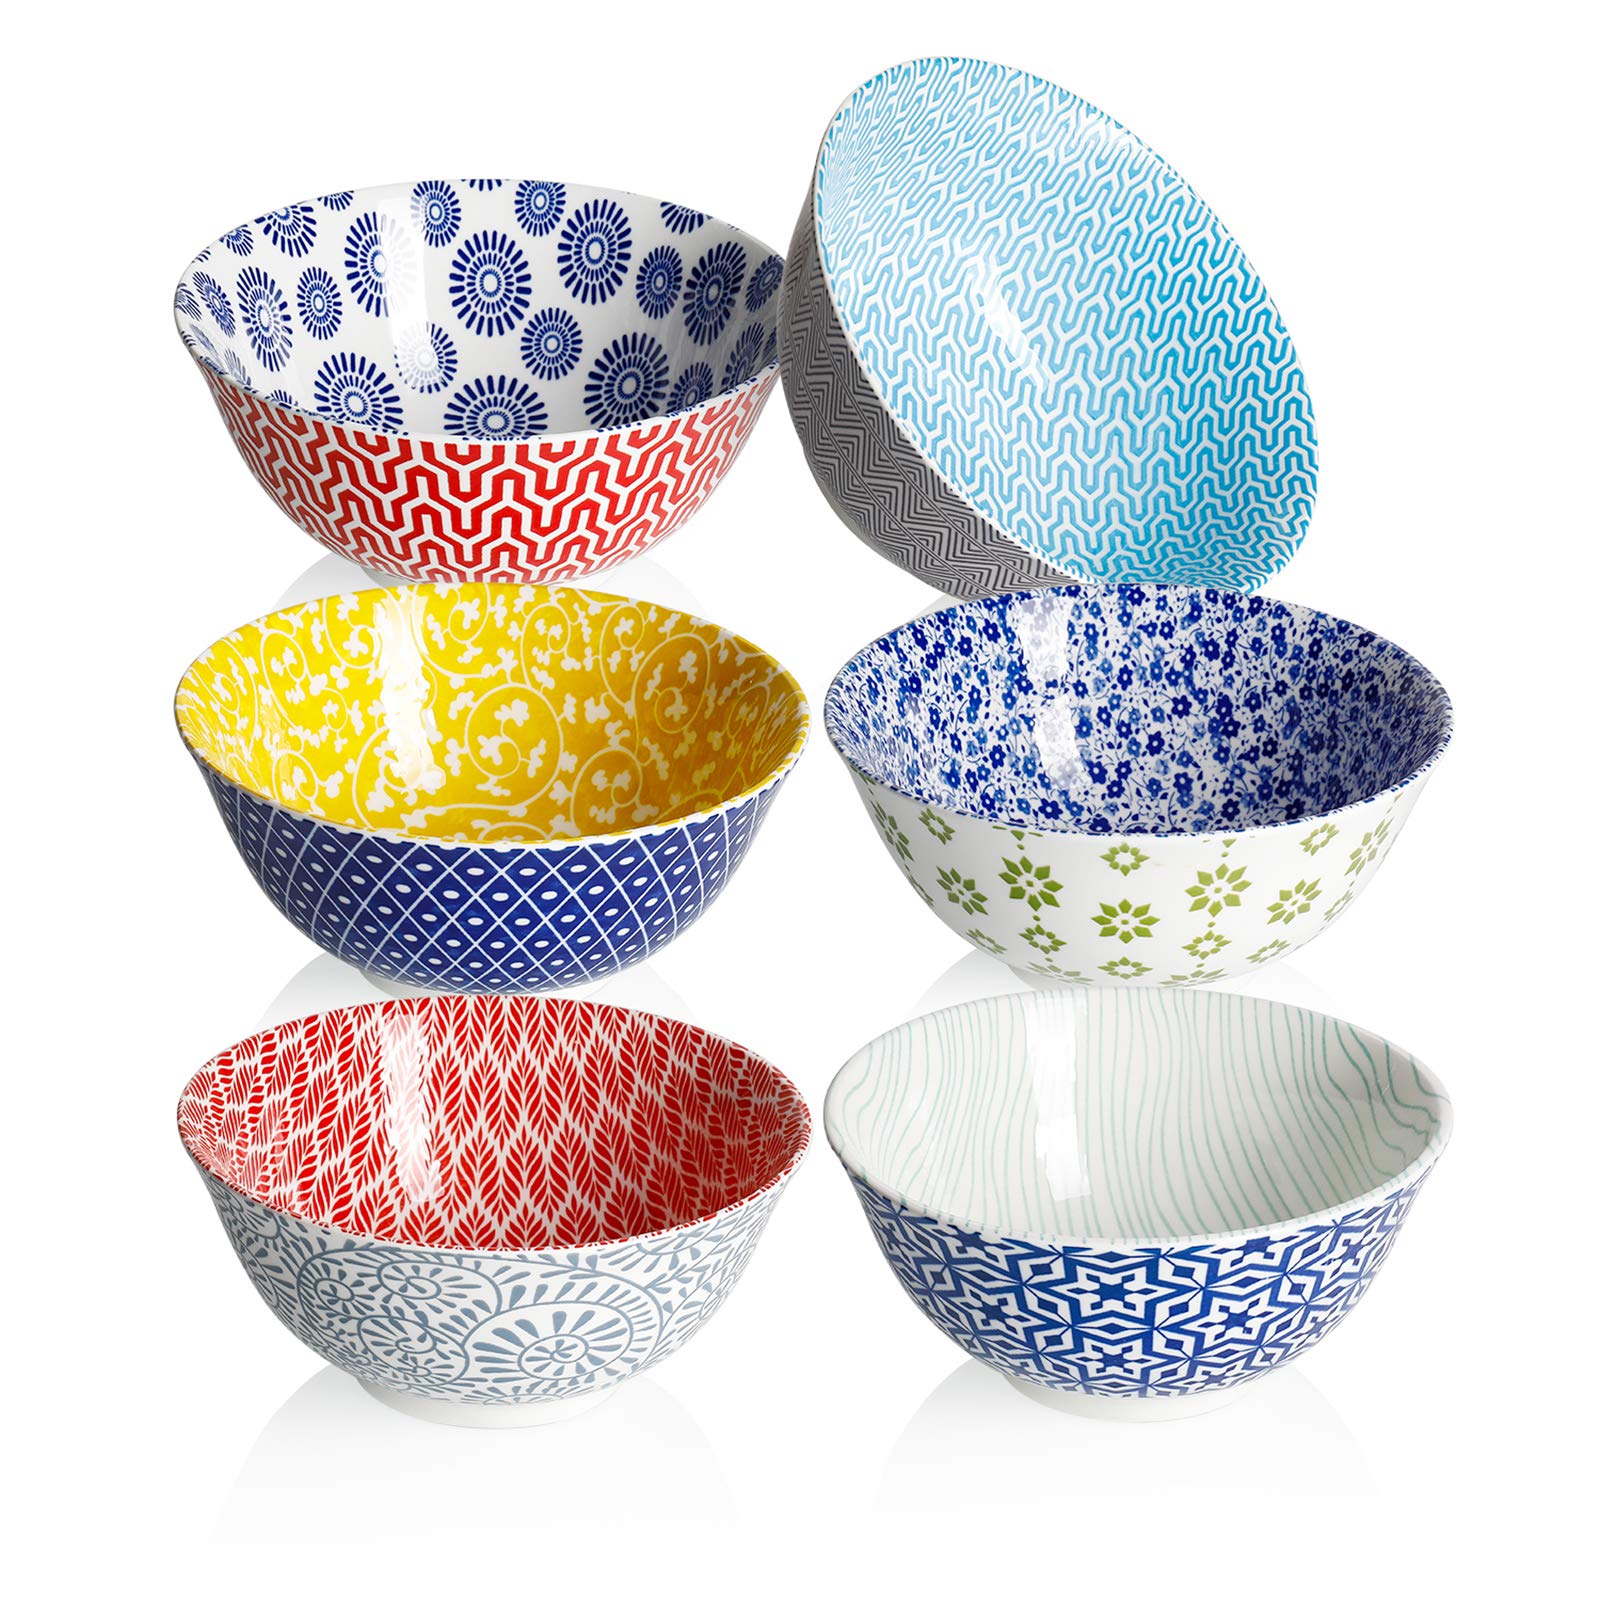 Amazingware Porcelain Bowls - 26 Ounce for Cereal, Soup, Salad and Fruit, Set of 6, Assorted Designs